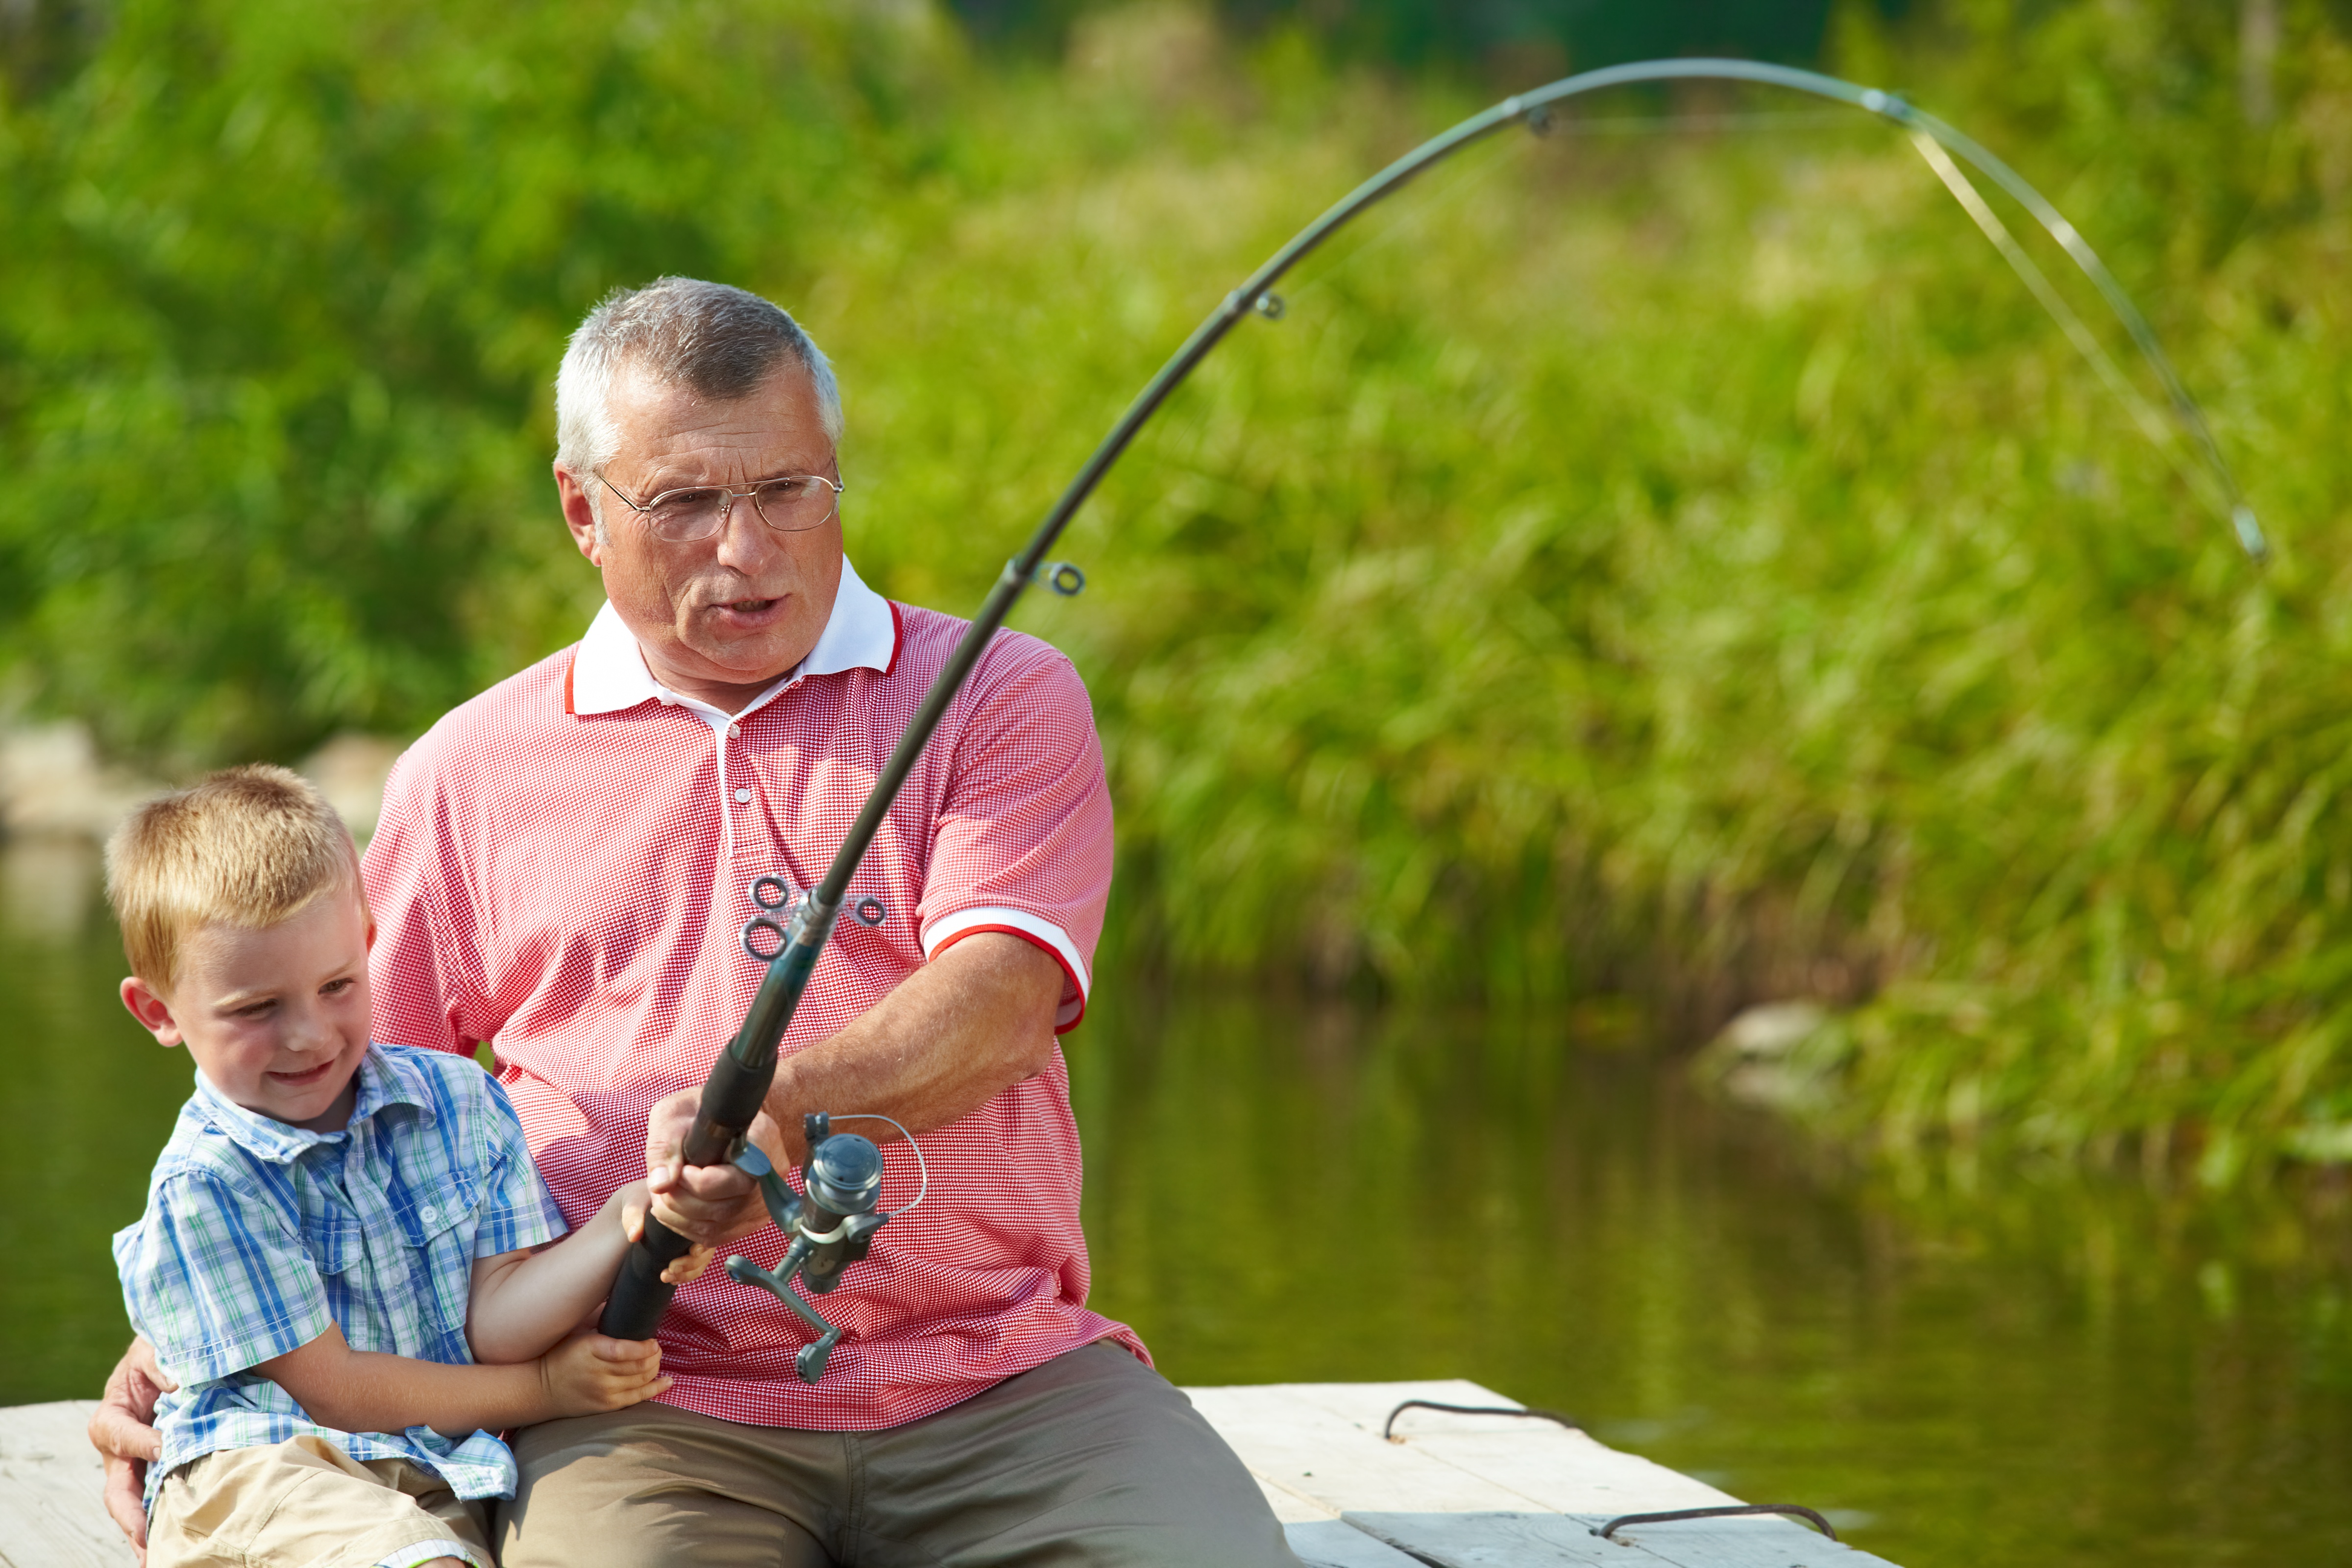 Дедушка ловит рыбу. Дед с внуком на рыбалке. Дедушка рыбачит с внуком. Ltleirfcdyerjvyfhs,fkrt. Дед и внук рыбачат.